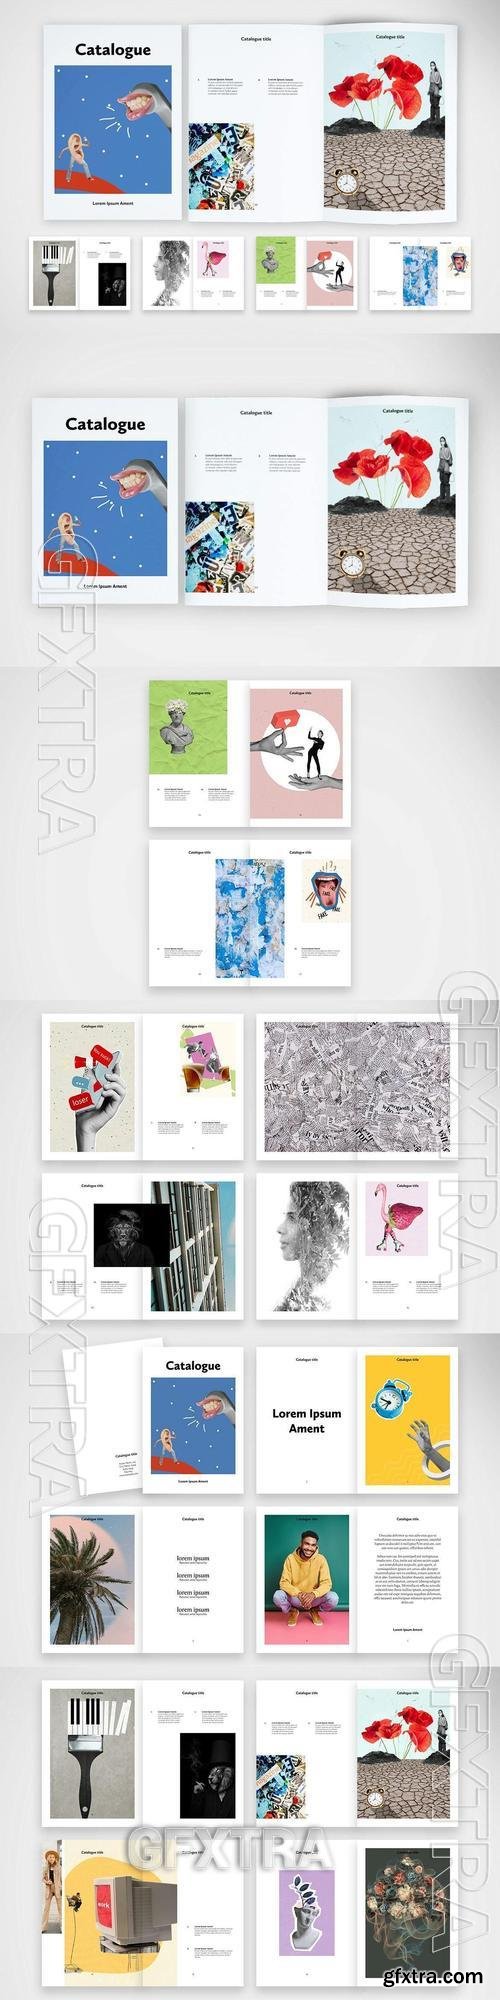 Minimal Fashion Photo-book Layout EFJ5VPP